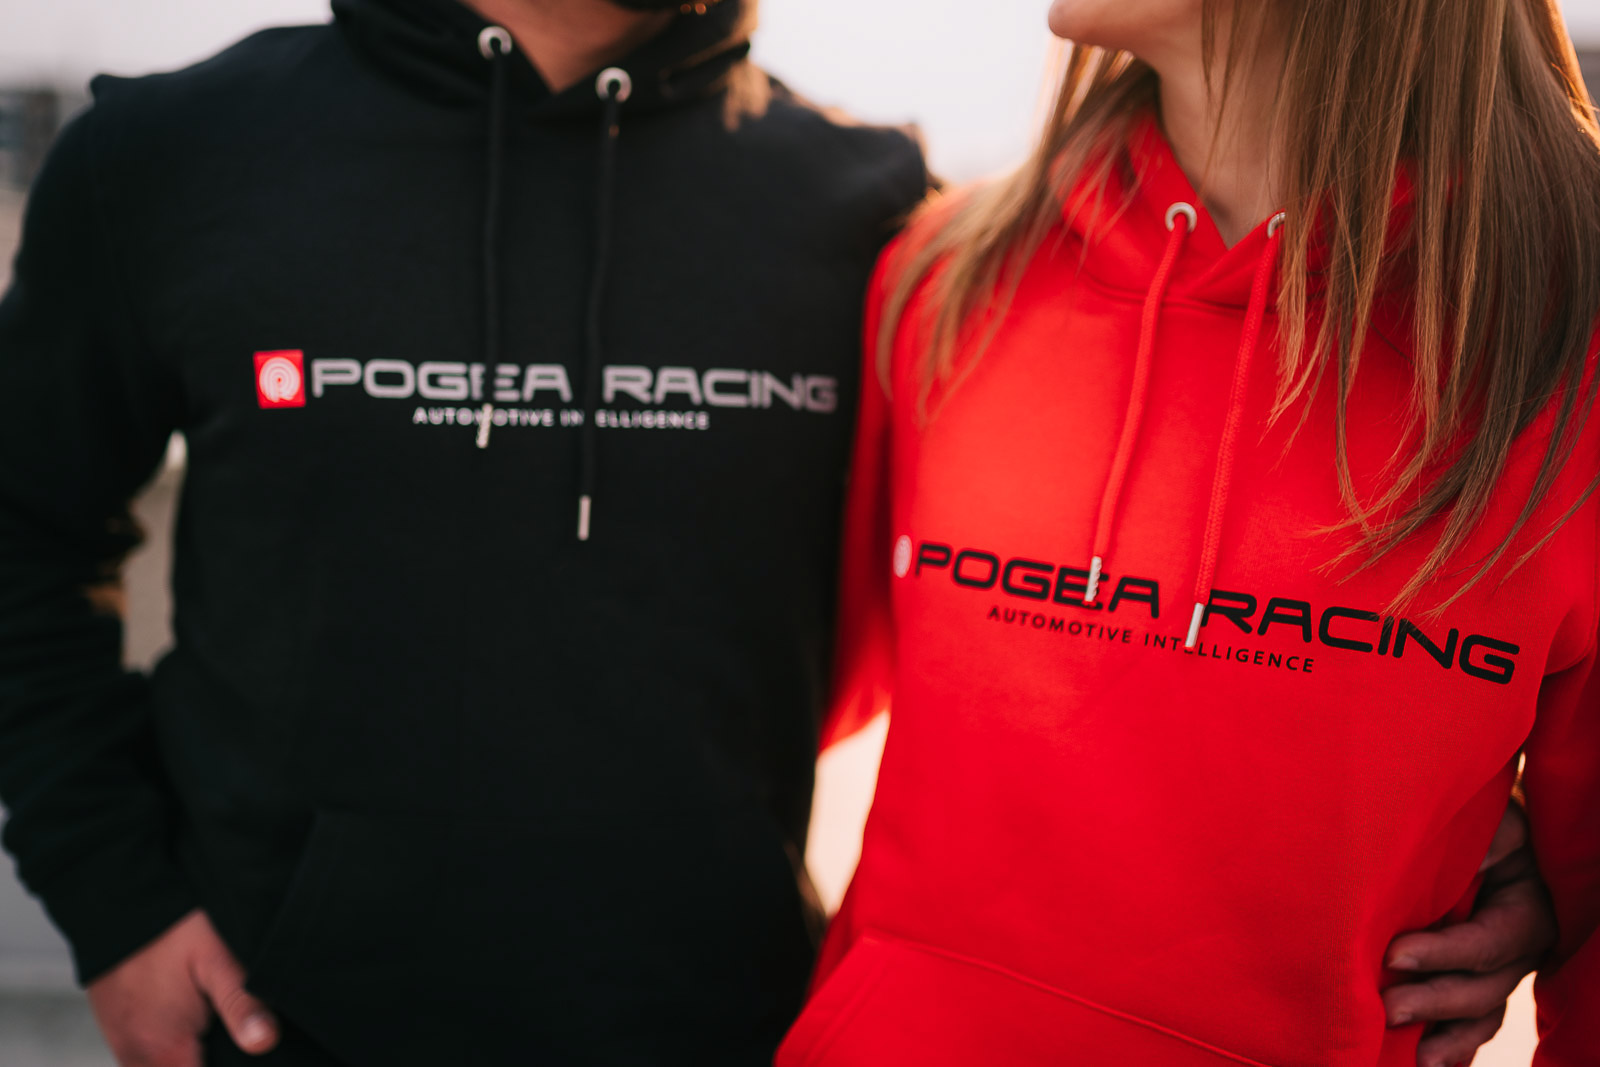 POGEA RACING GmbH